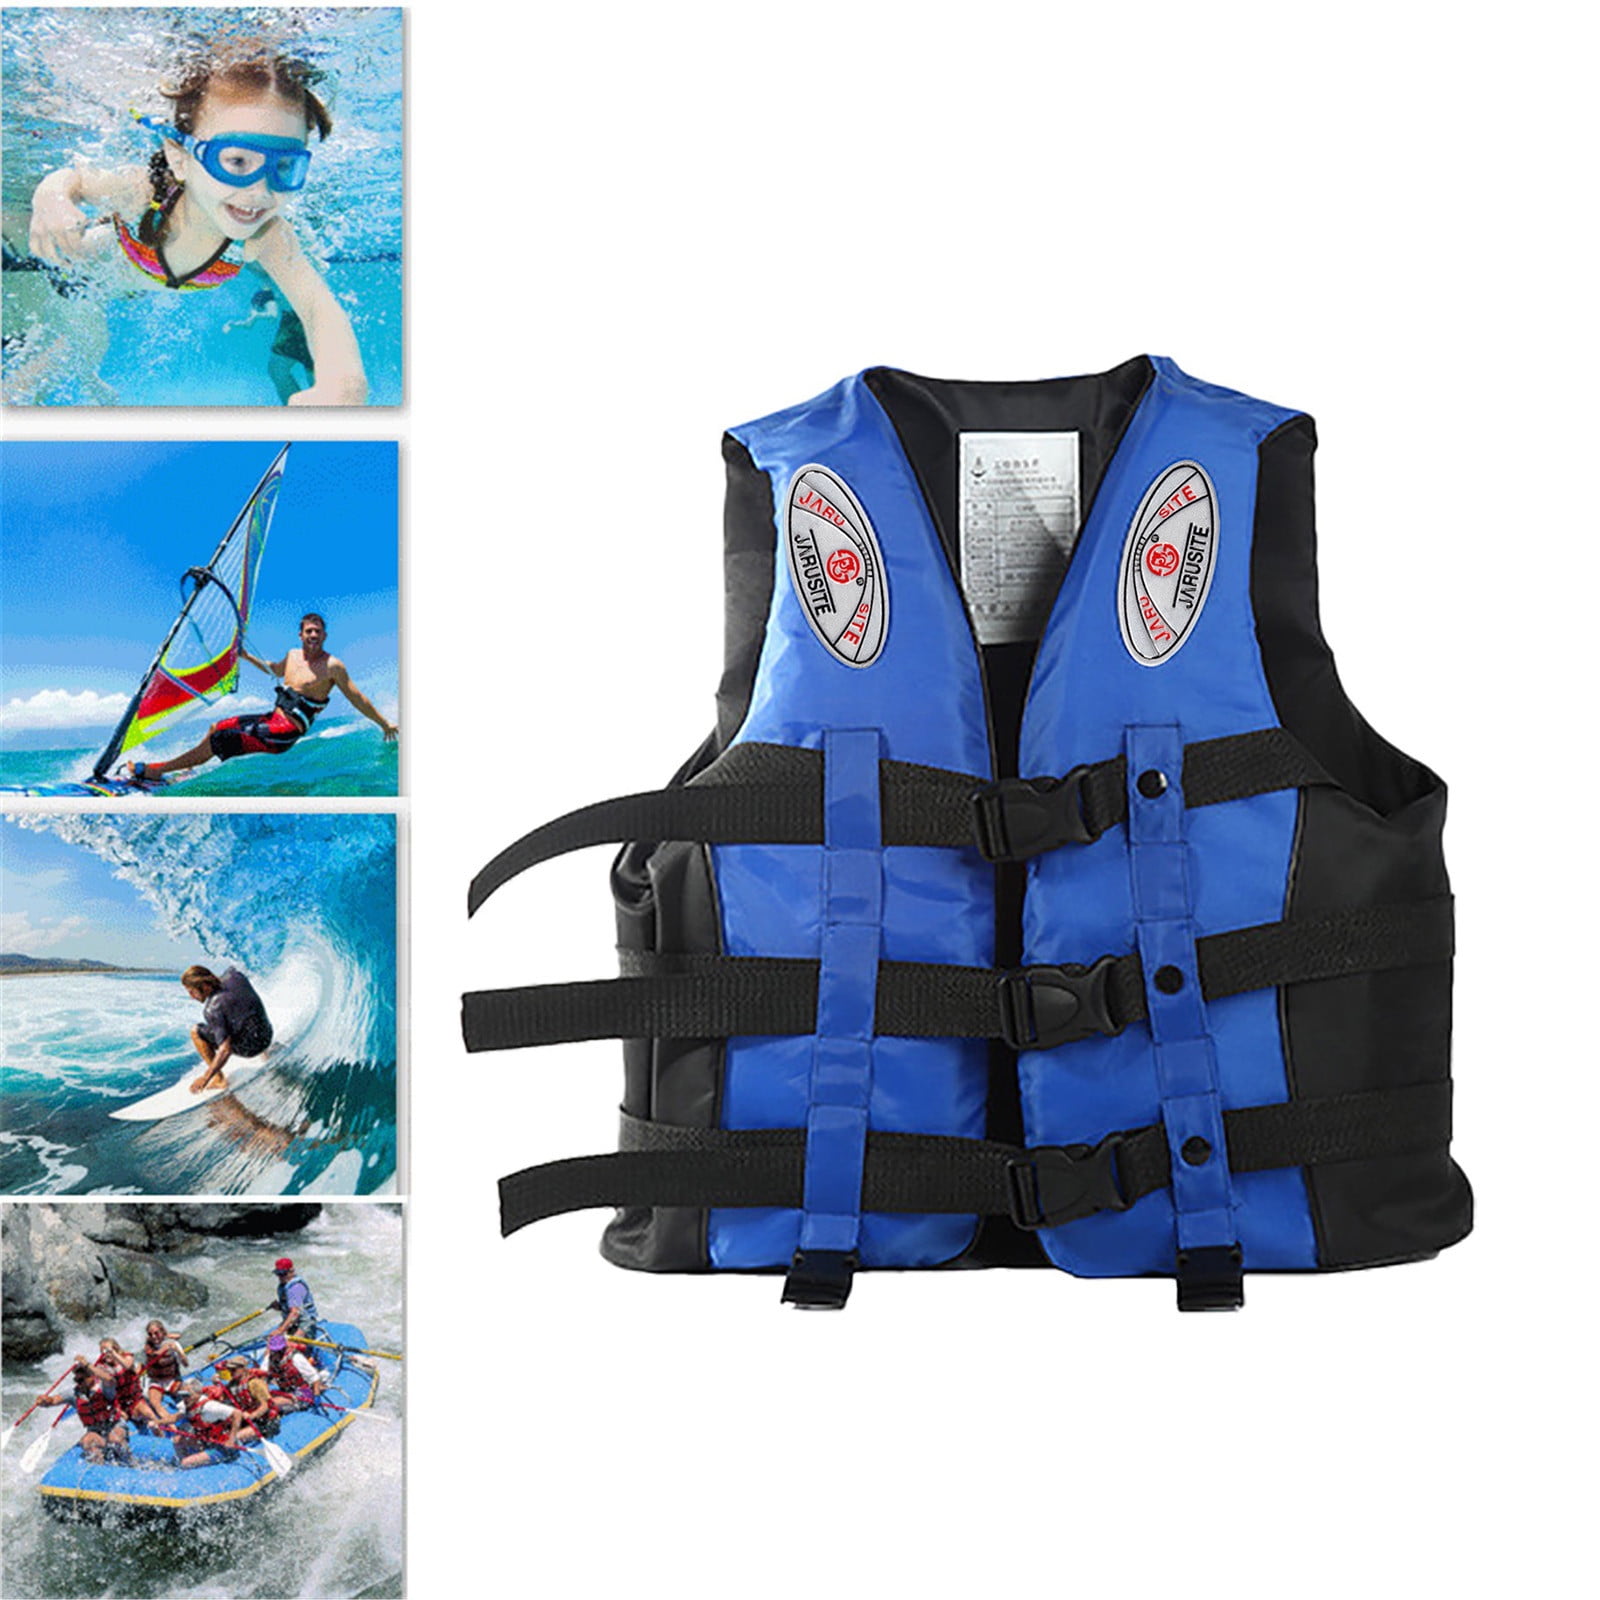 Ski Buoyancy Aid Kayak Sailing Boating Life Jackets Adults Kids Watersport Vest 